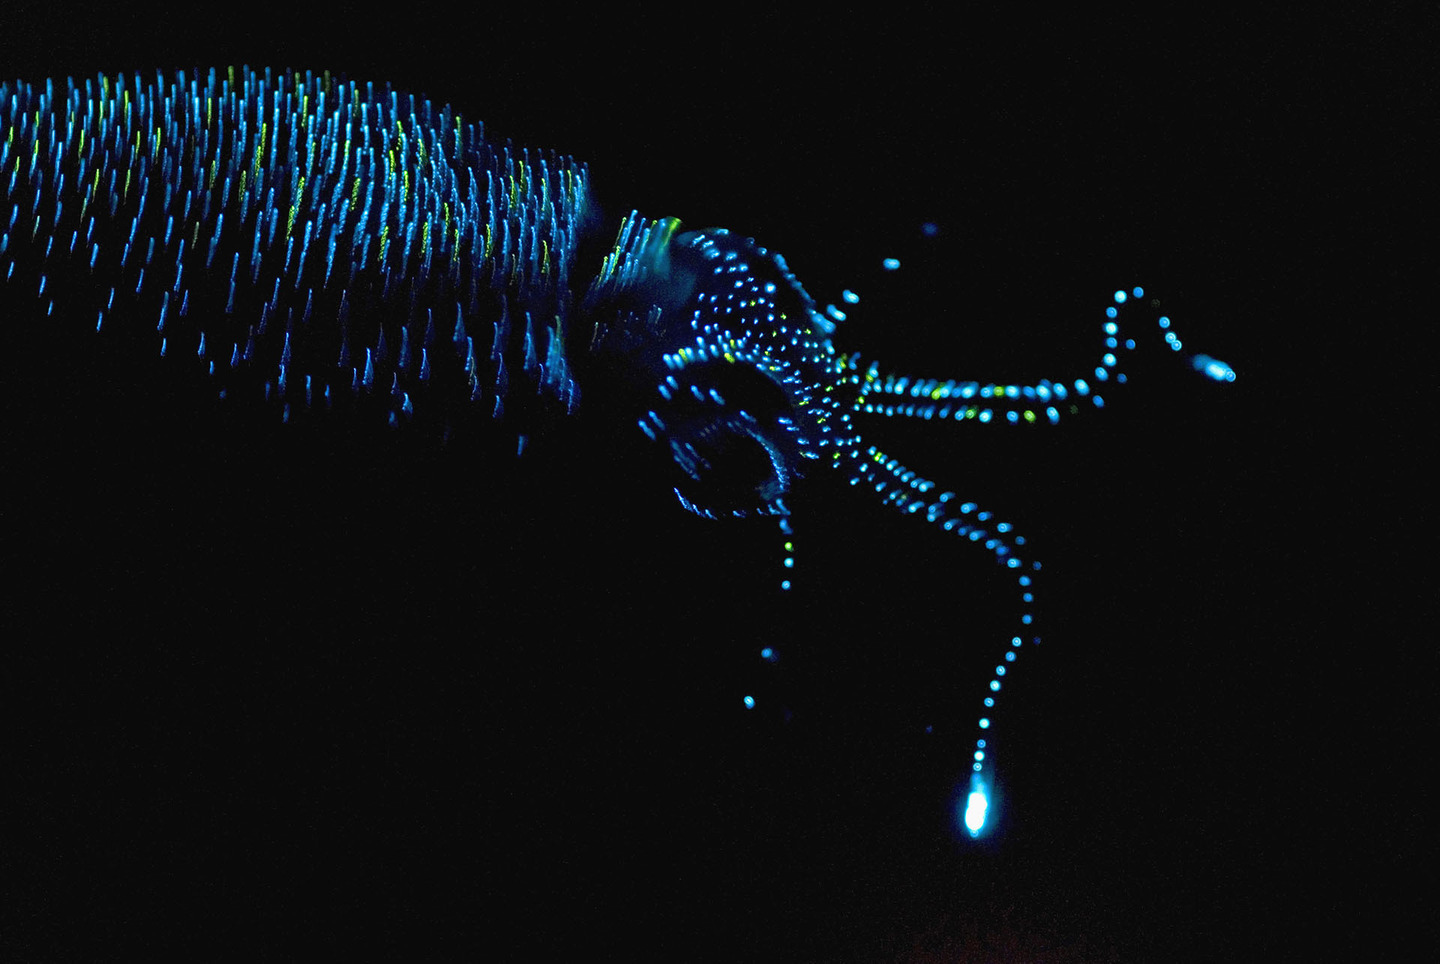 Japanese Firefly Squid (Watasenia scintillans) bioluminescence